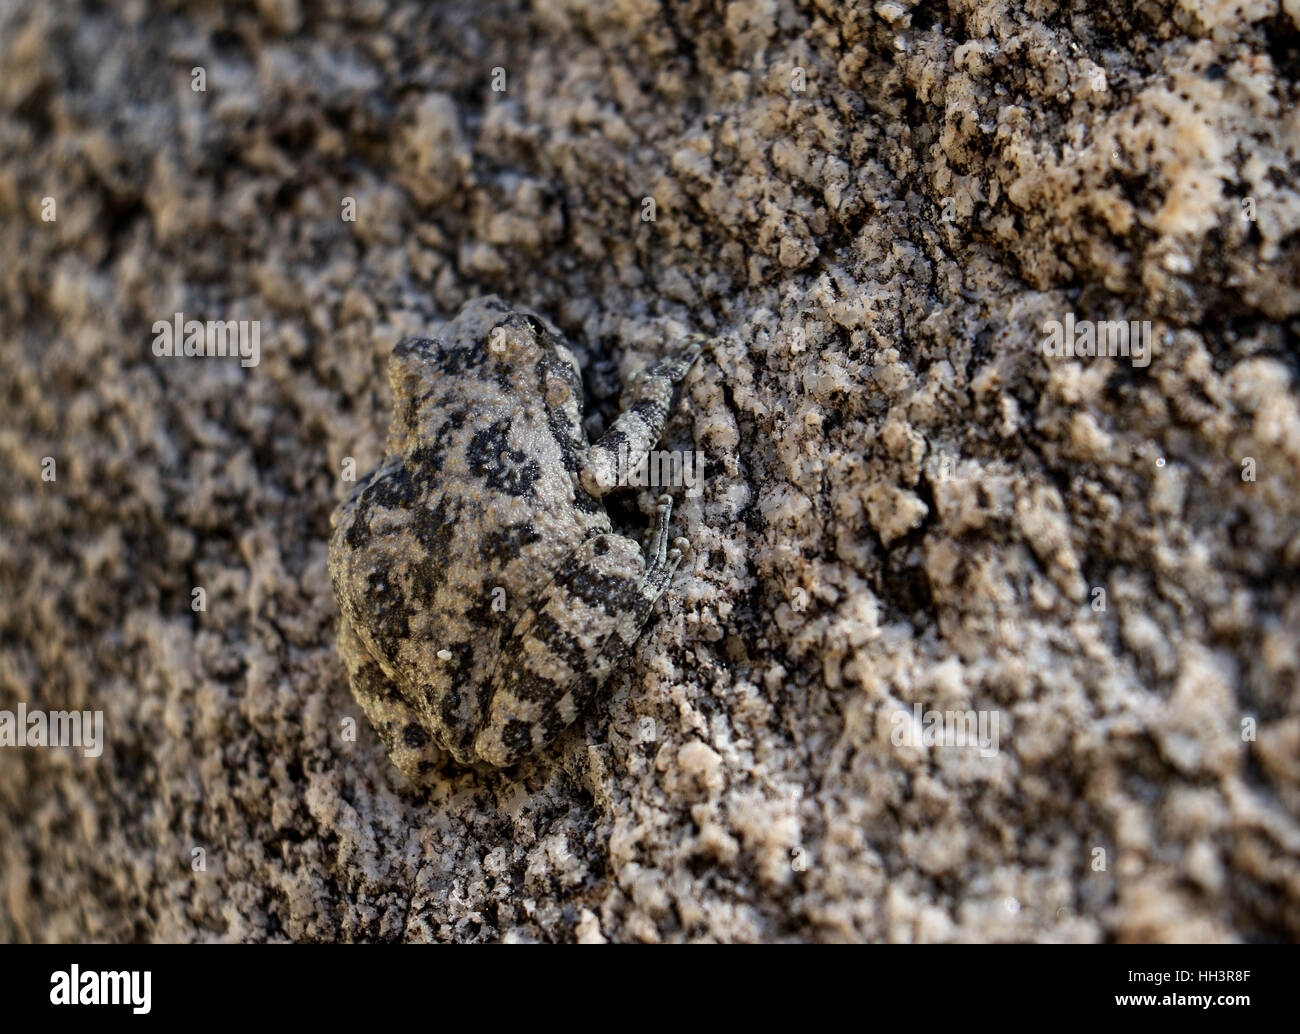 canyon tree frog camouflage on granite rock in Arizona creek Stock Photo